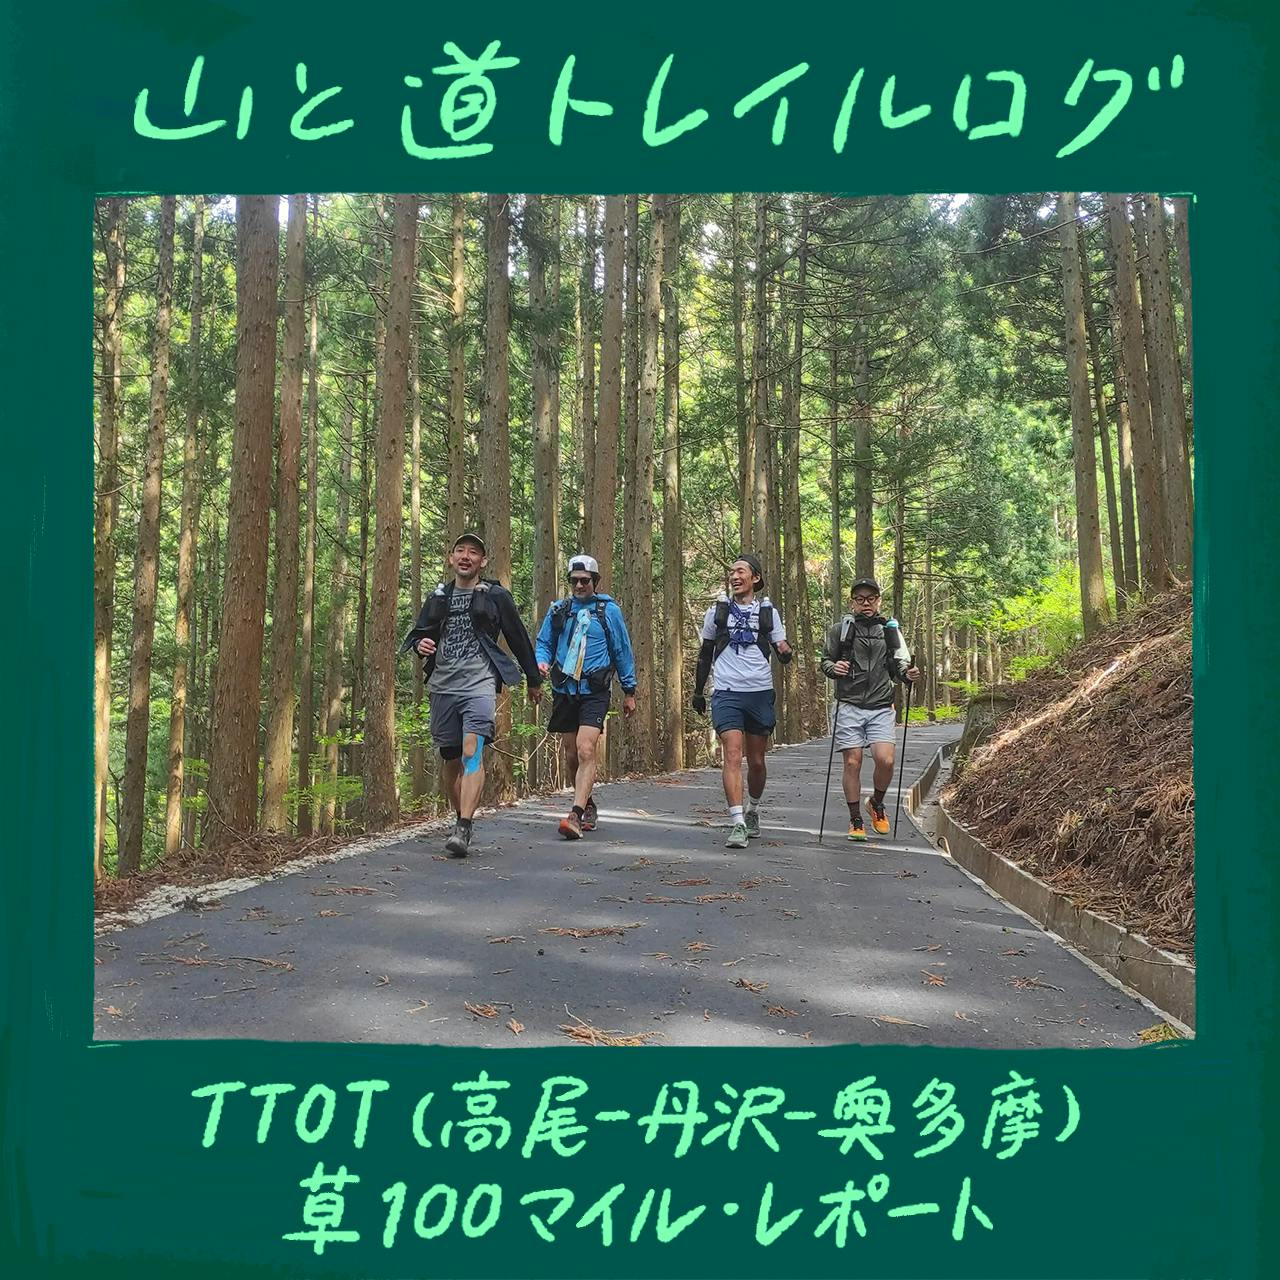 TTOT(高尾-丹沢-奥多摩)<br>草100マイル・レポート